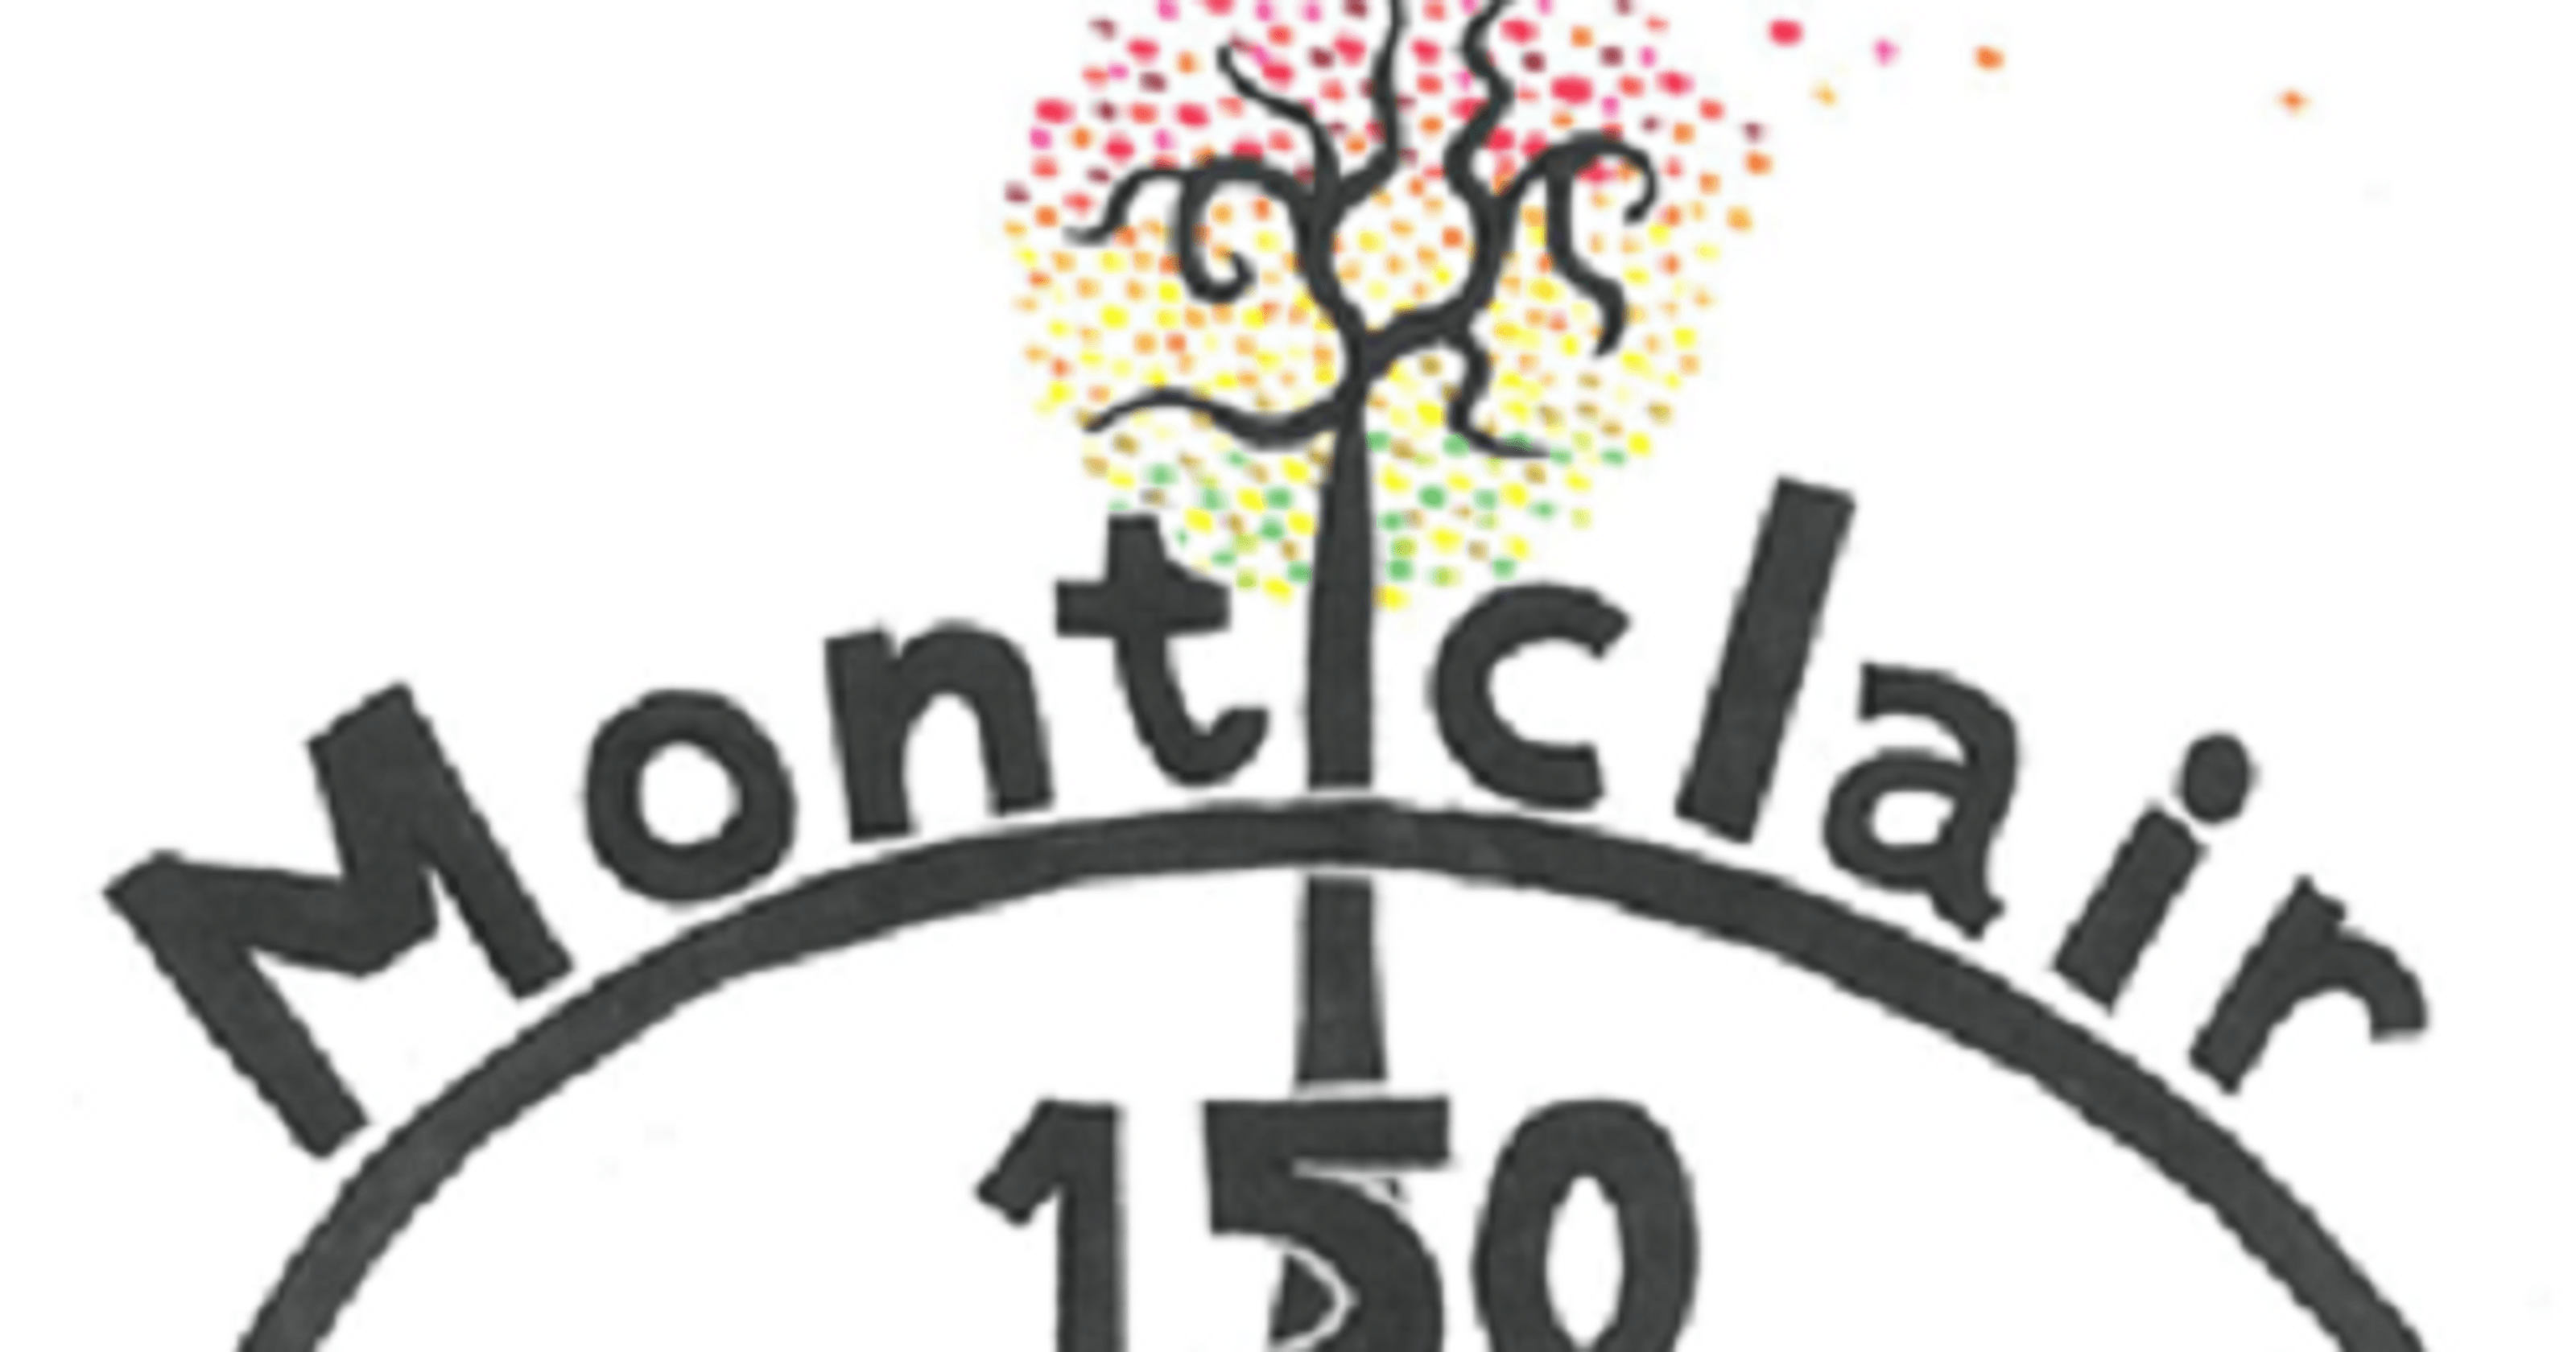 Montclair Logo - Celebrations abound in Montclair NJ in 2018 for milestone